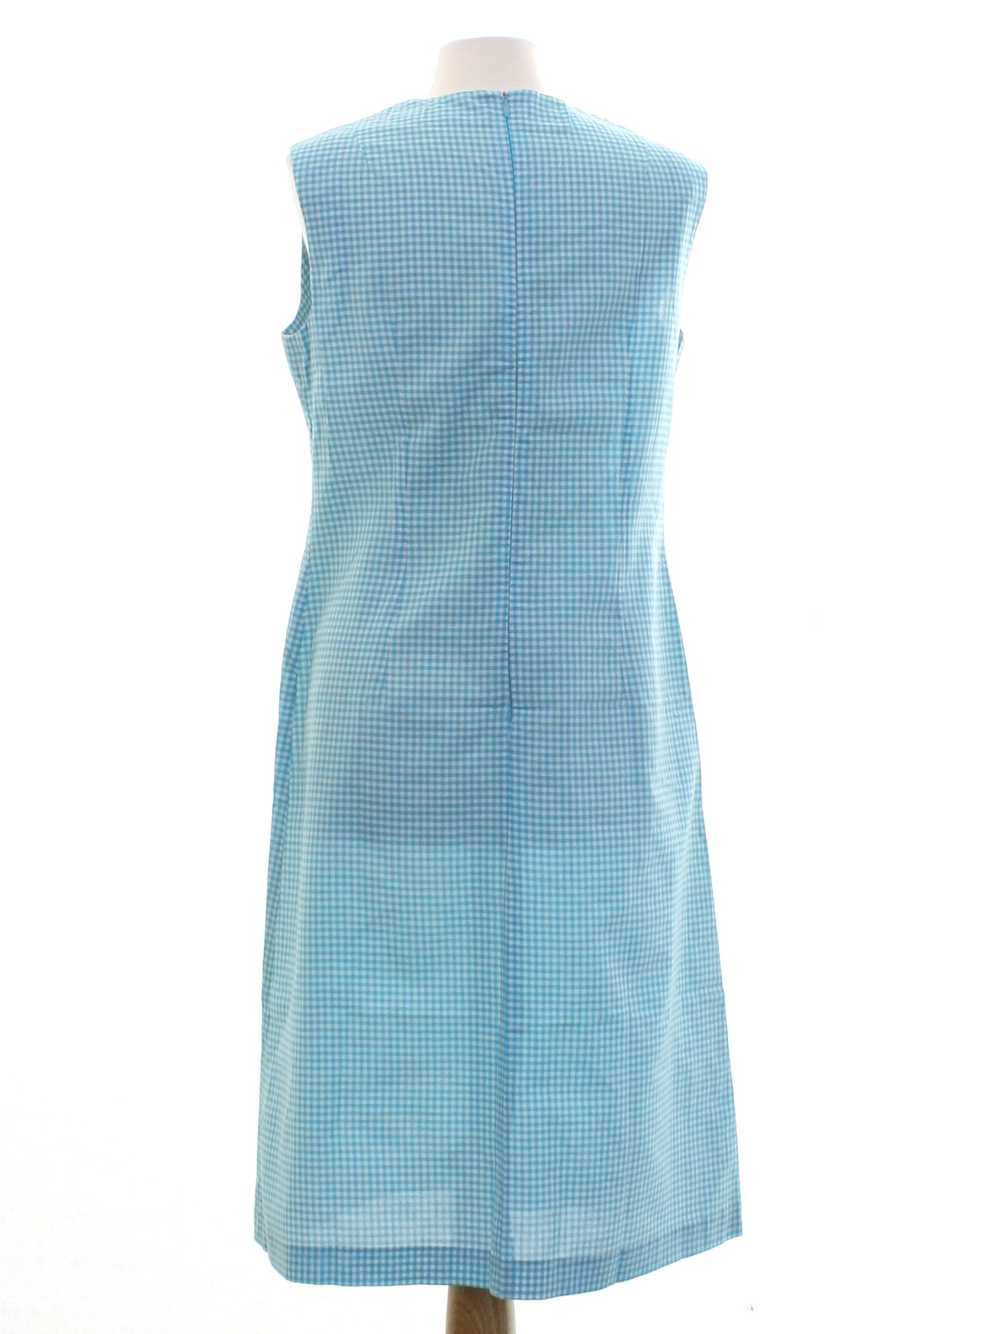 1970's Mod A-Line Dress - image 3